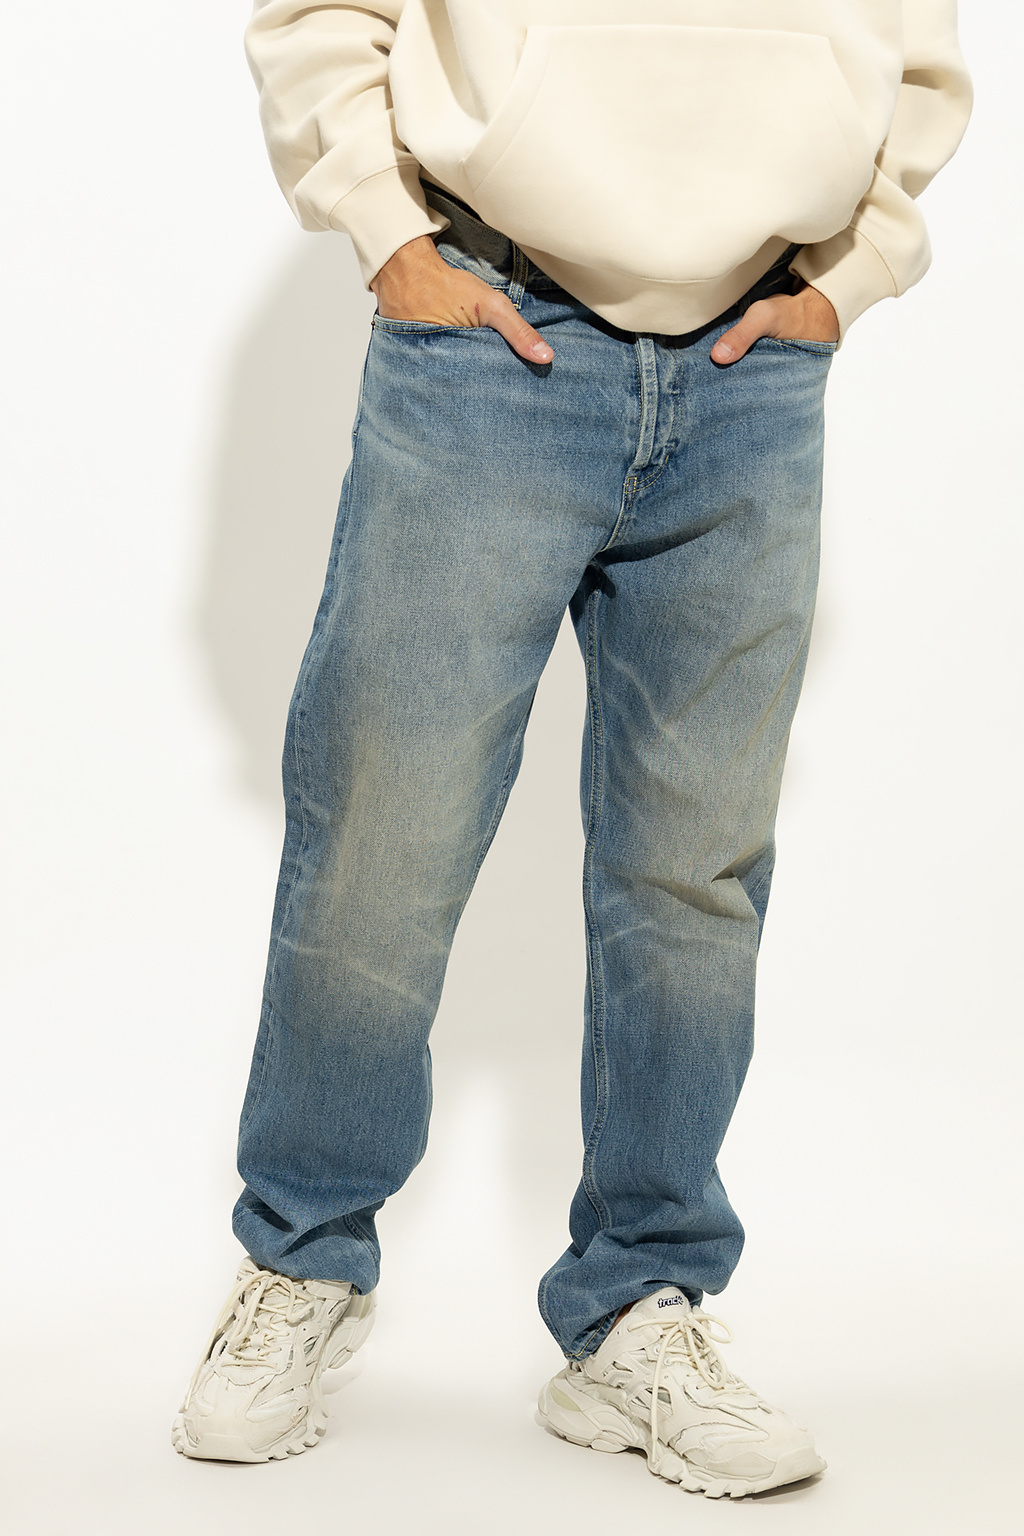 Moxie Knit Dress Distressed jeans